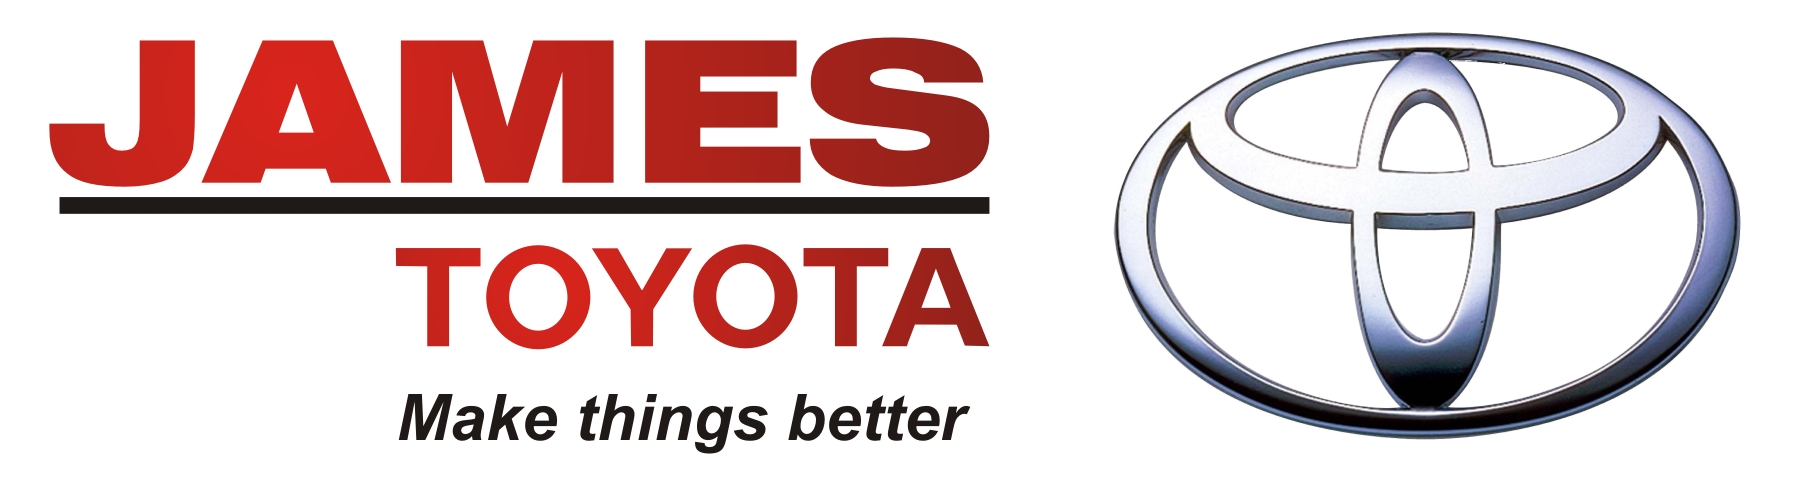 James Toyota Ltd.